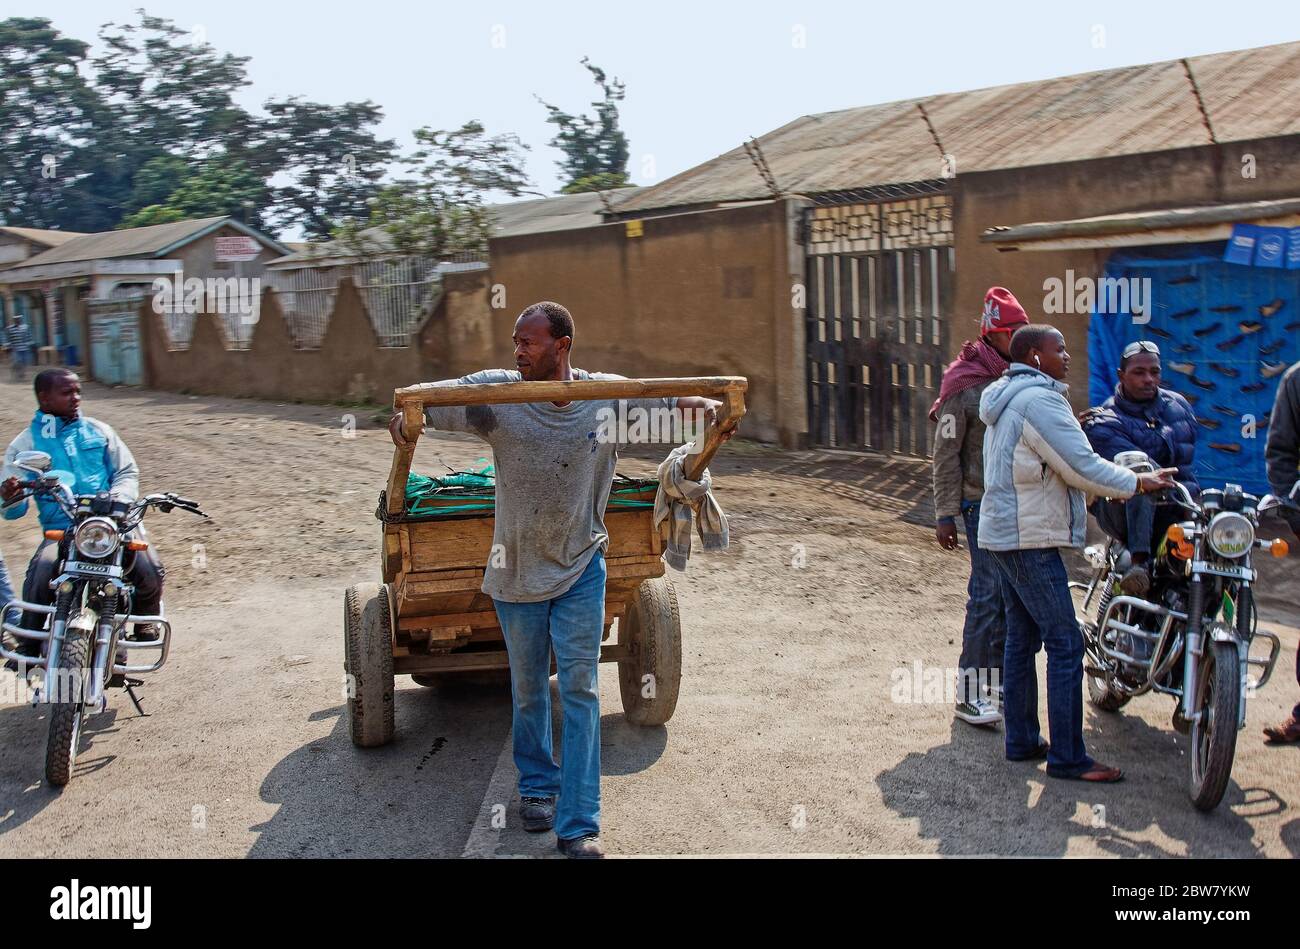 man pulling laarge cart, sweating, perspiration stains, working hard, job, people talking, motorcycles, shopping area, Tanzania; Africa Stock Photo